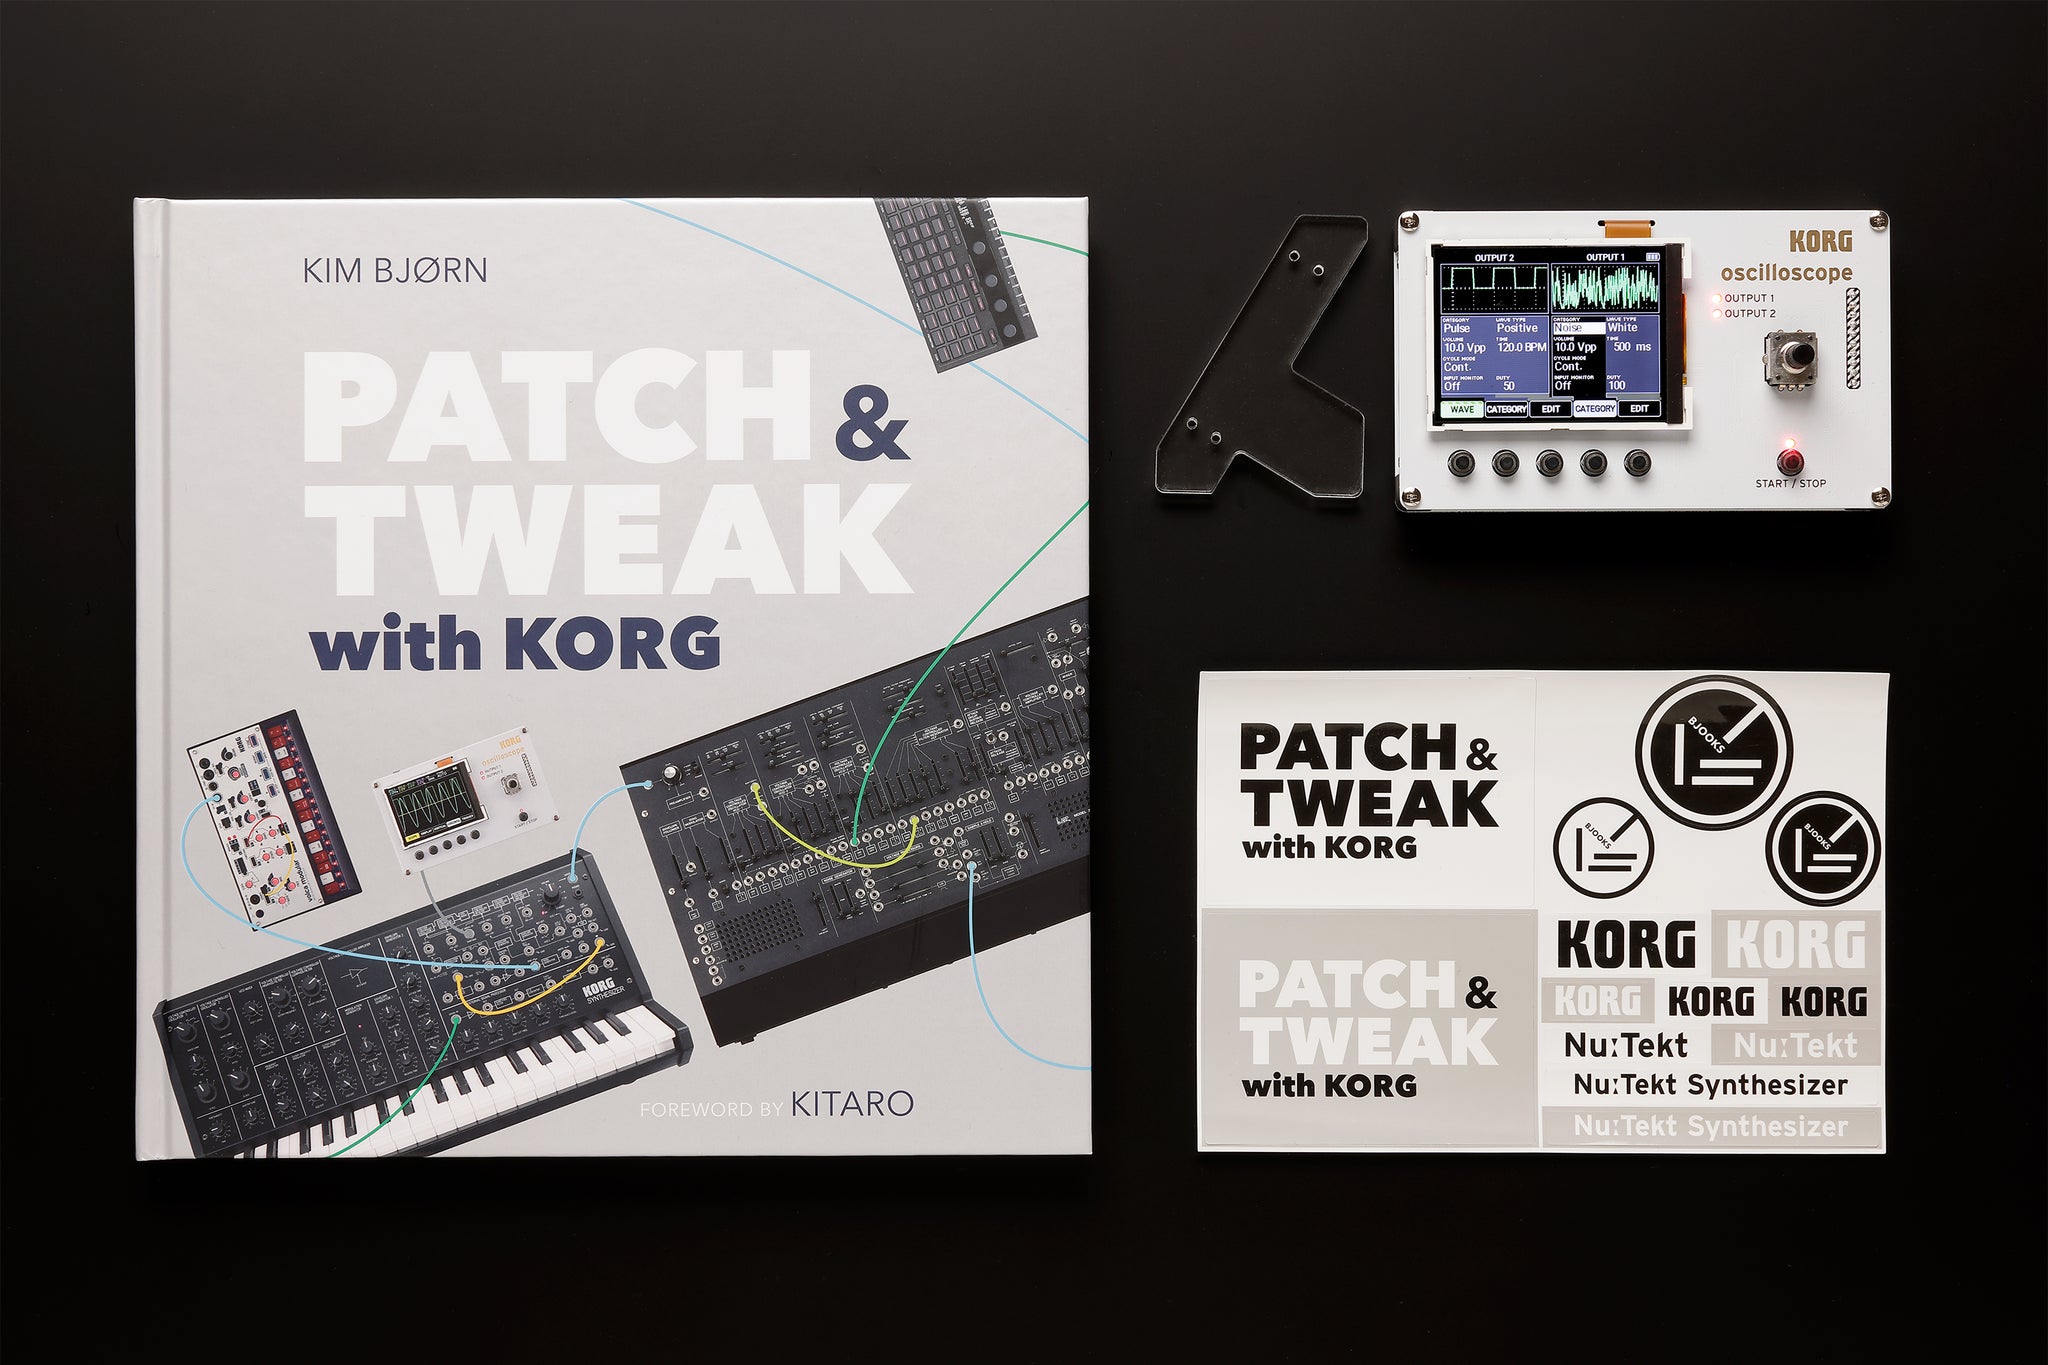 Nu:Tekt NTS-2 oscilloscope kit + Patch & Tweak